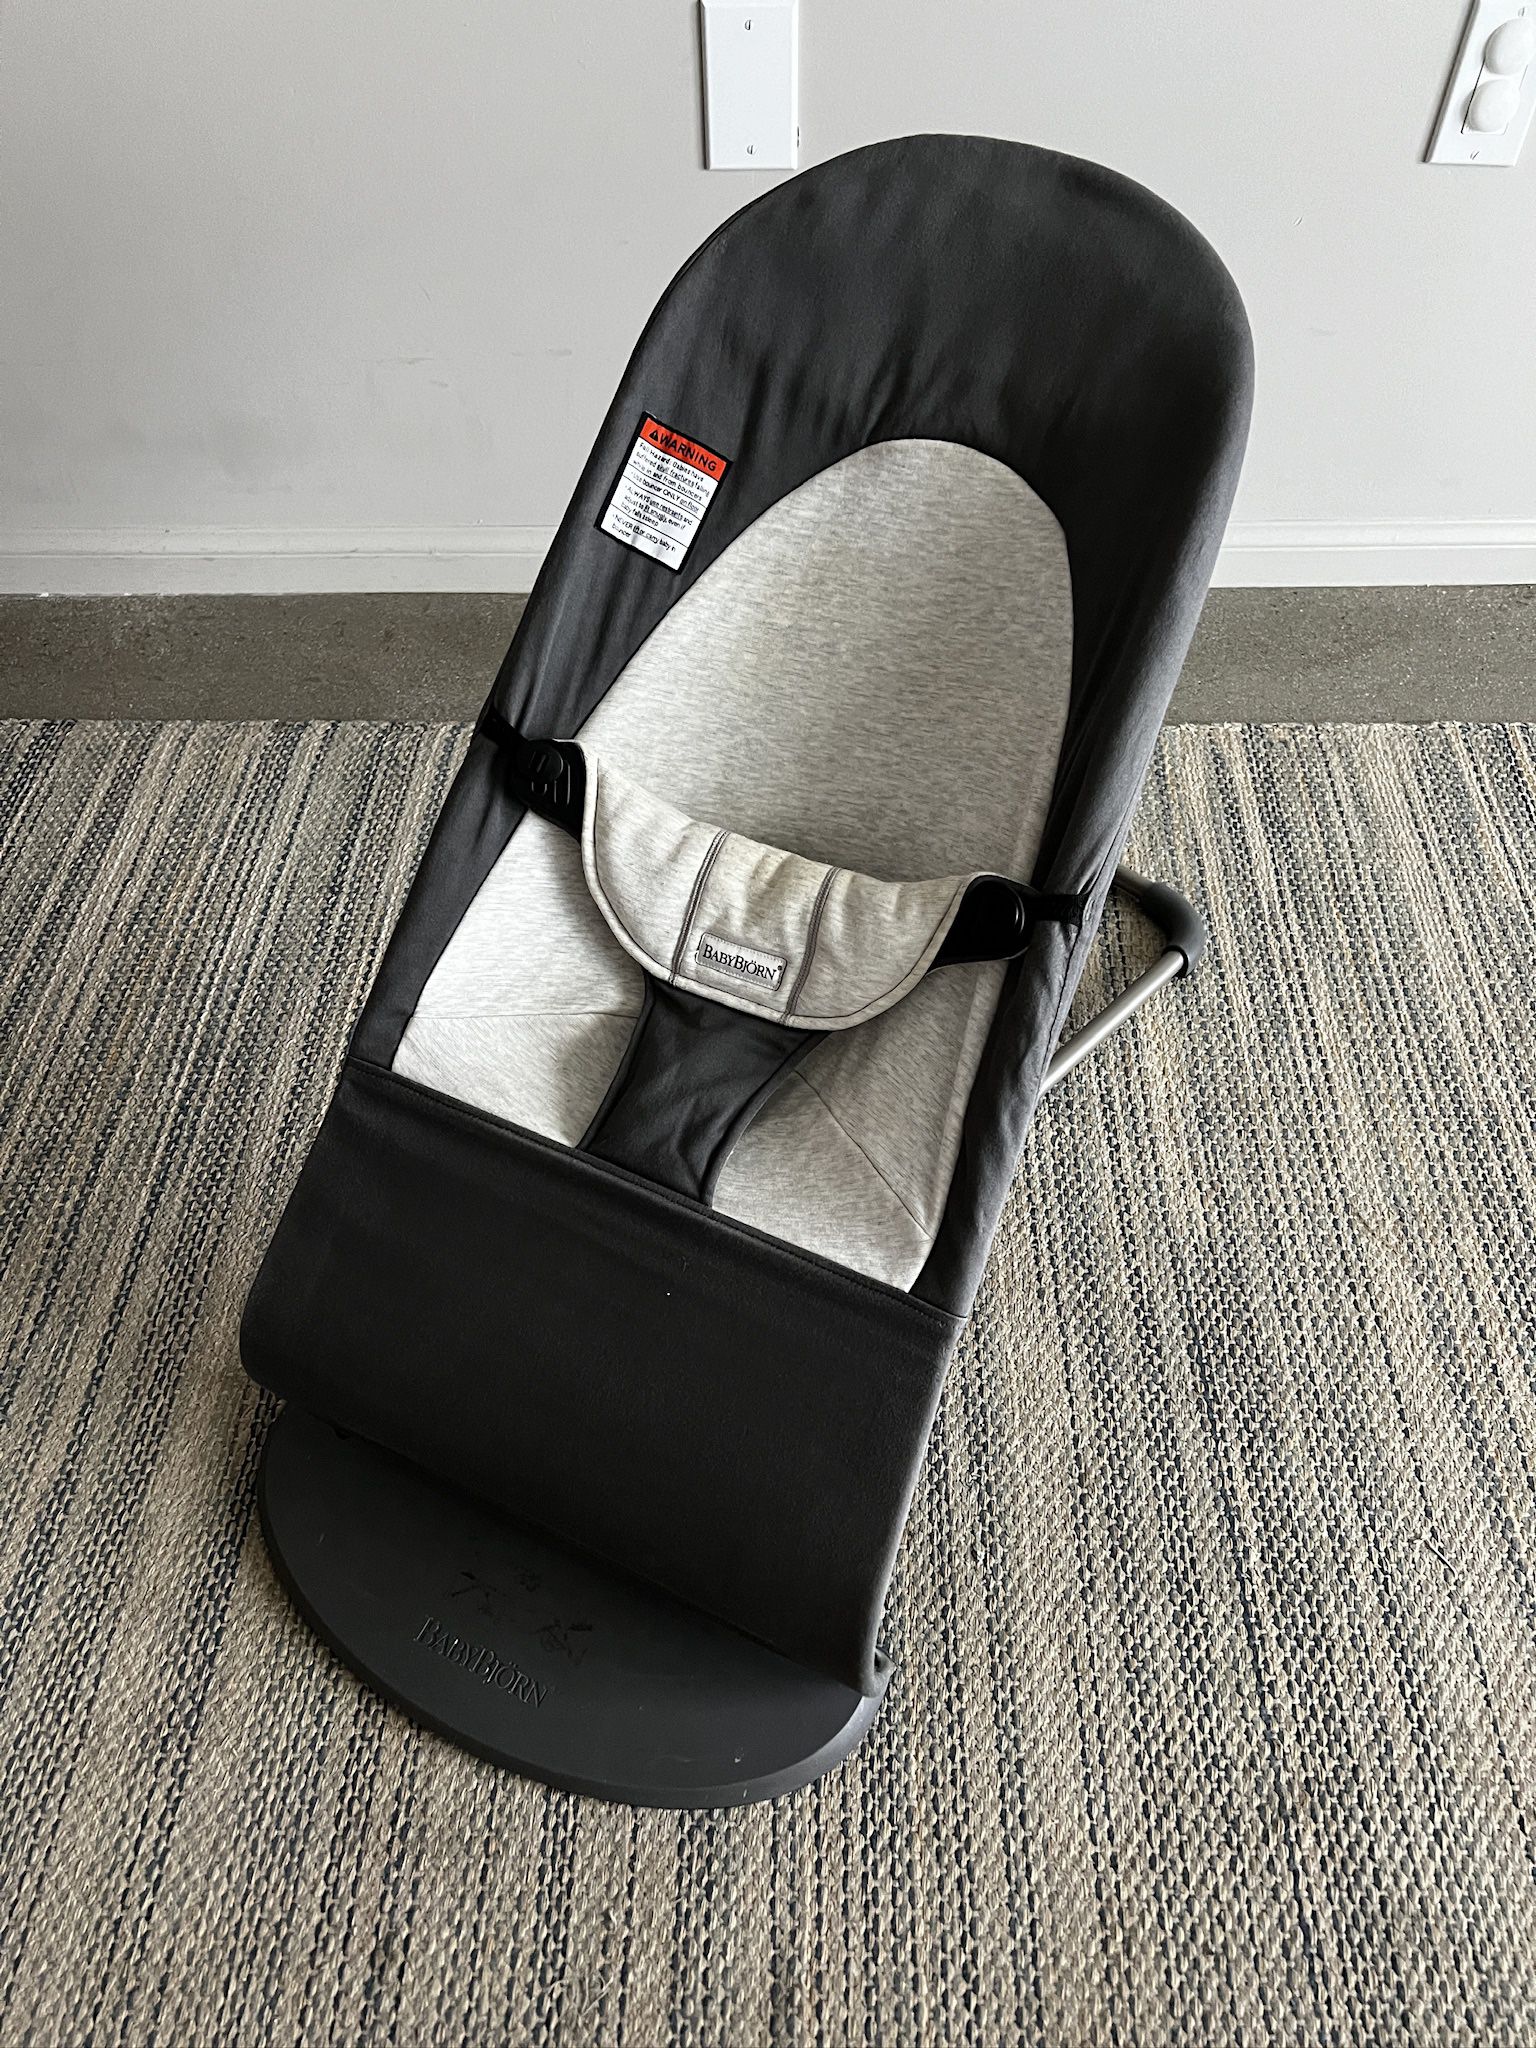 Babybjorn Bouncer Chair For infants (Balance Soft)